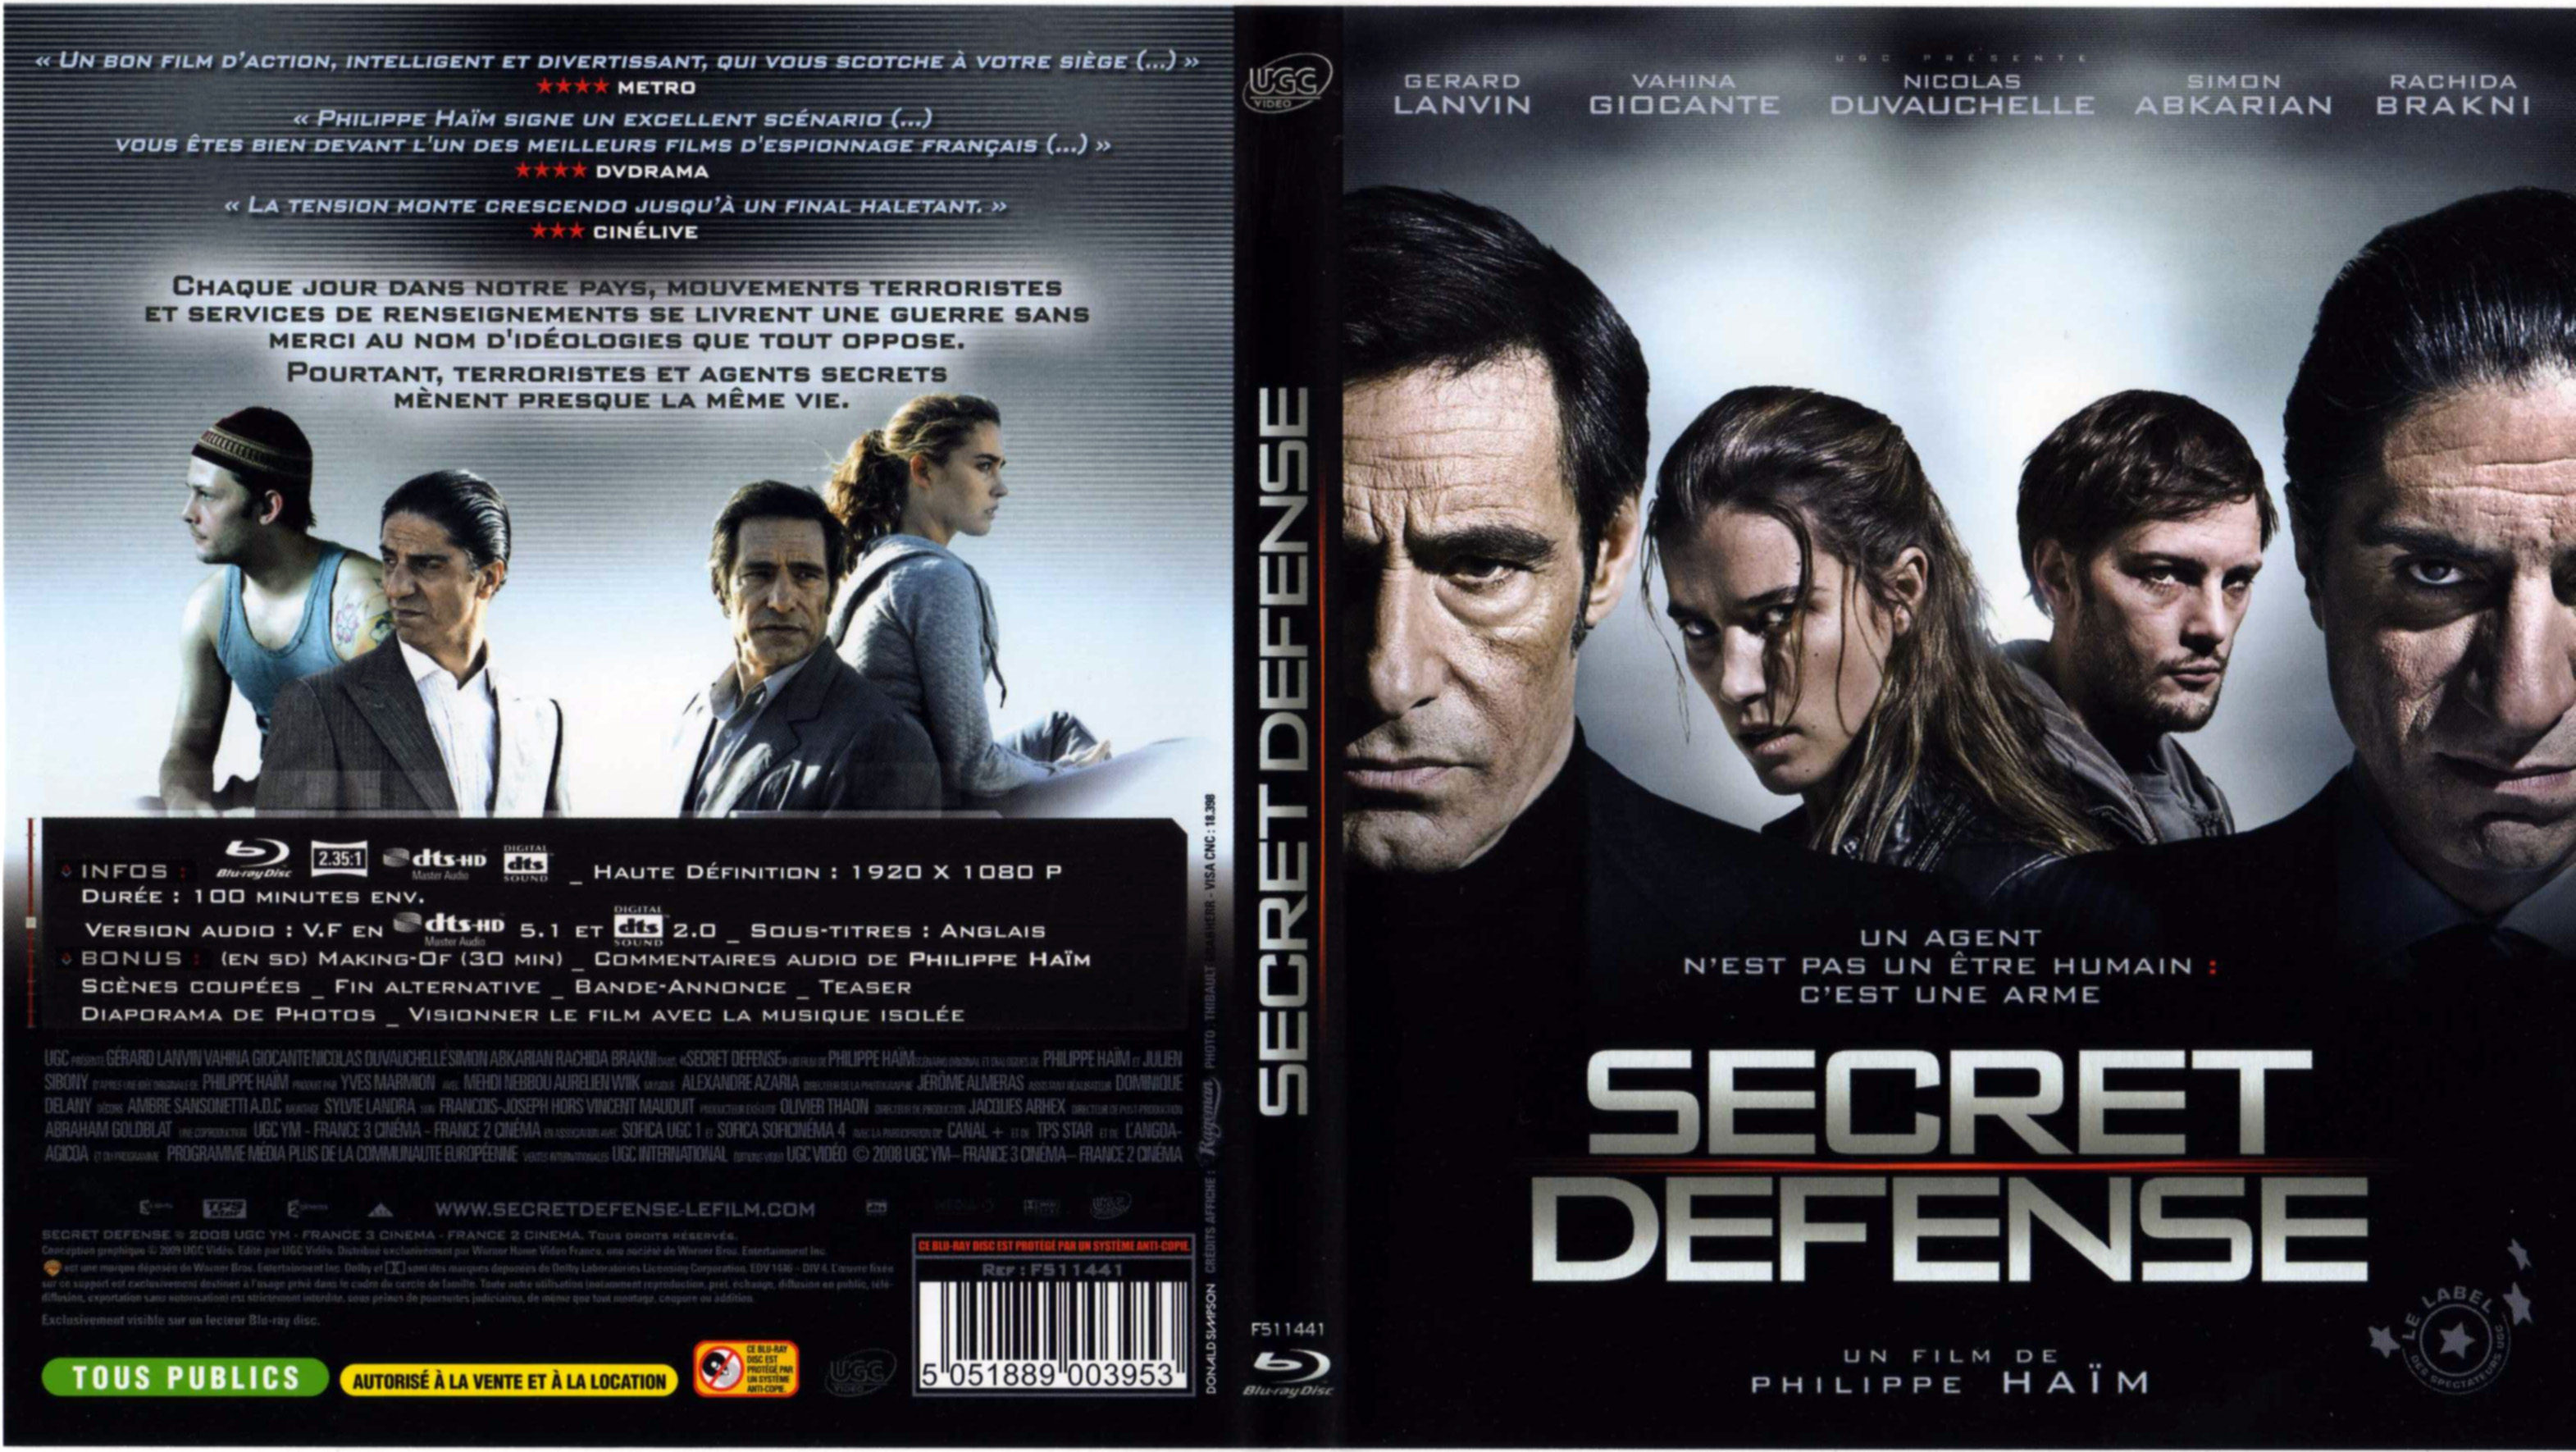 Jaquette DVD Secret defense (2008) (BLU-RAY)